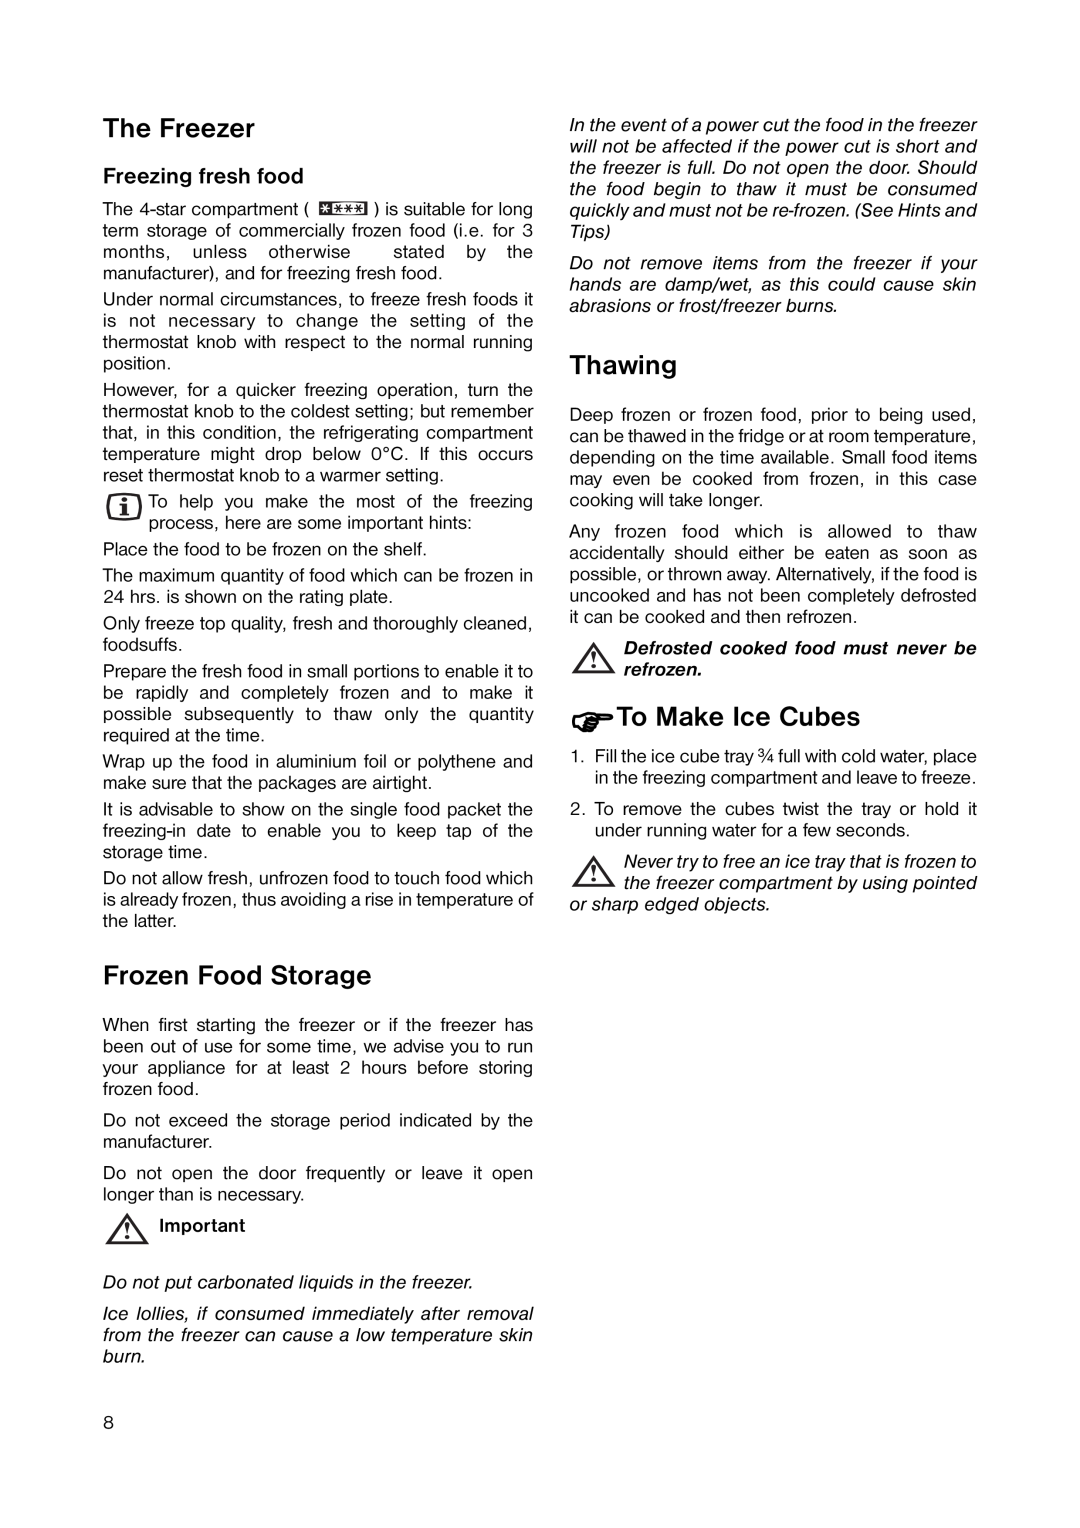 Zanussi ZRD 1843 manual The Freezer, Frozen Food Storage, Thawing, To Make Ice Cubes, Freezing fresh food 